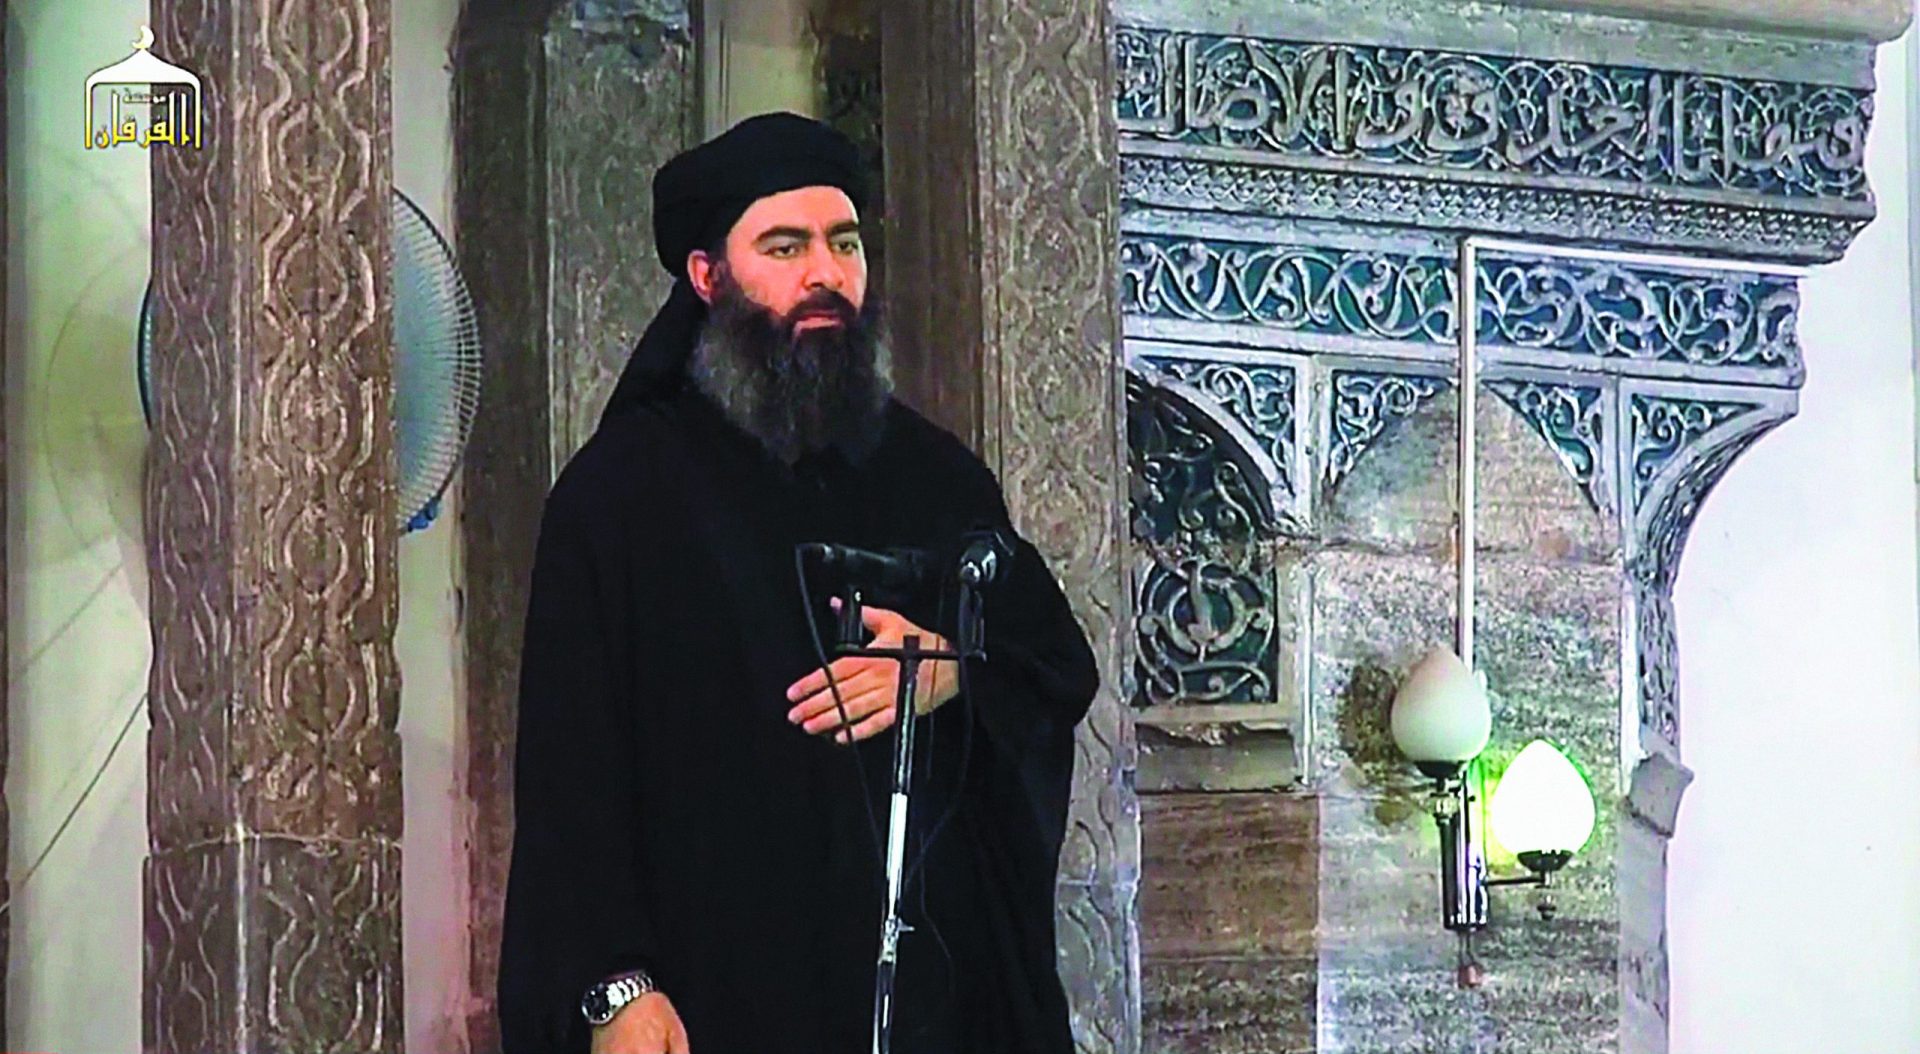 Estará o líder do Estado Islâmico mesmo morto?